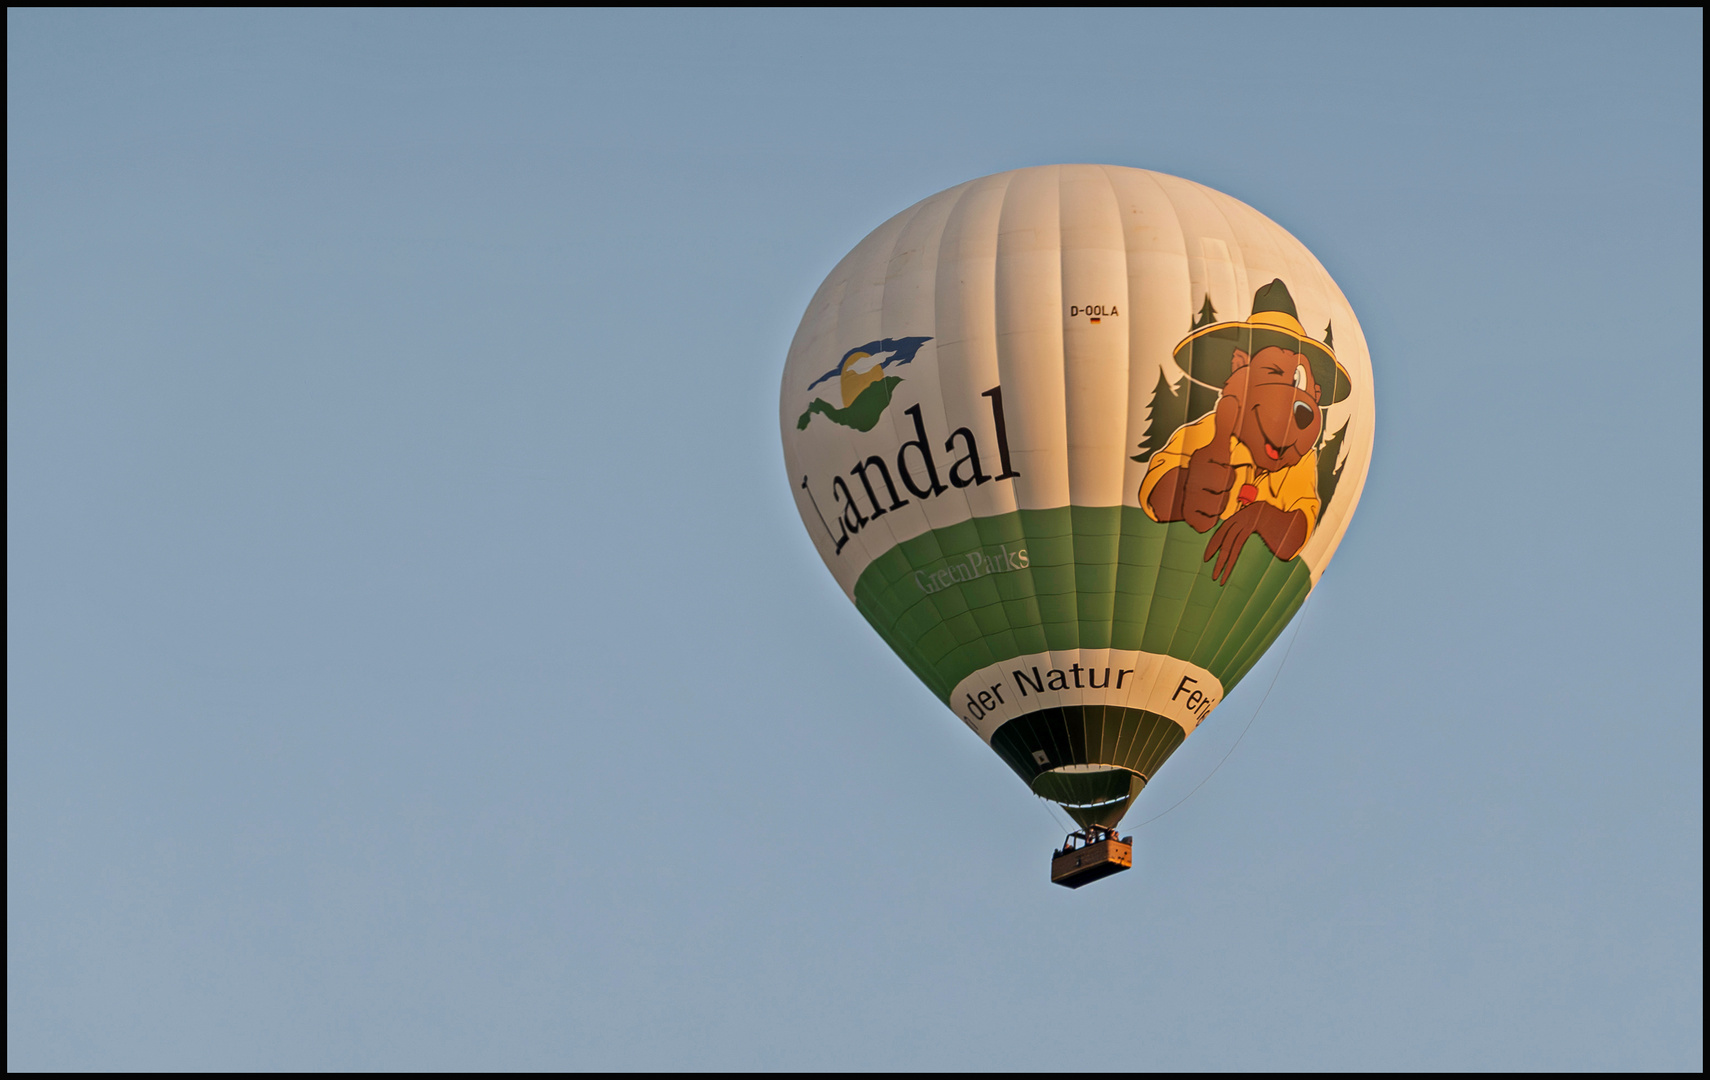 "Landal"-Heißluftballon